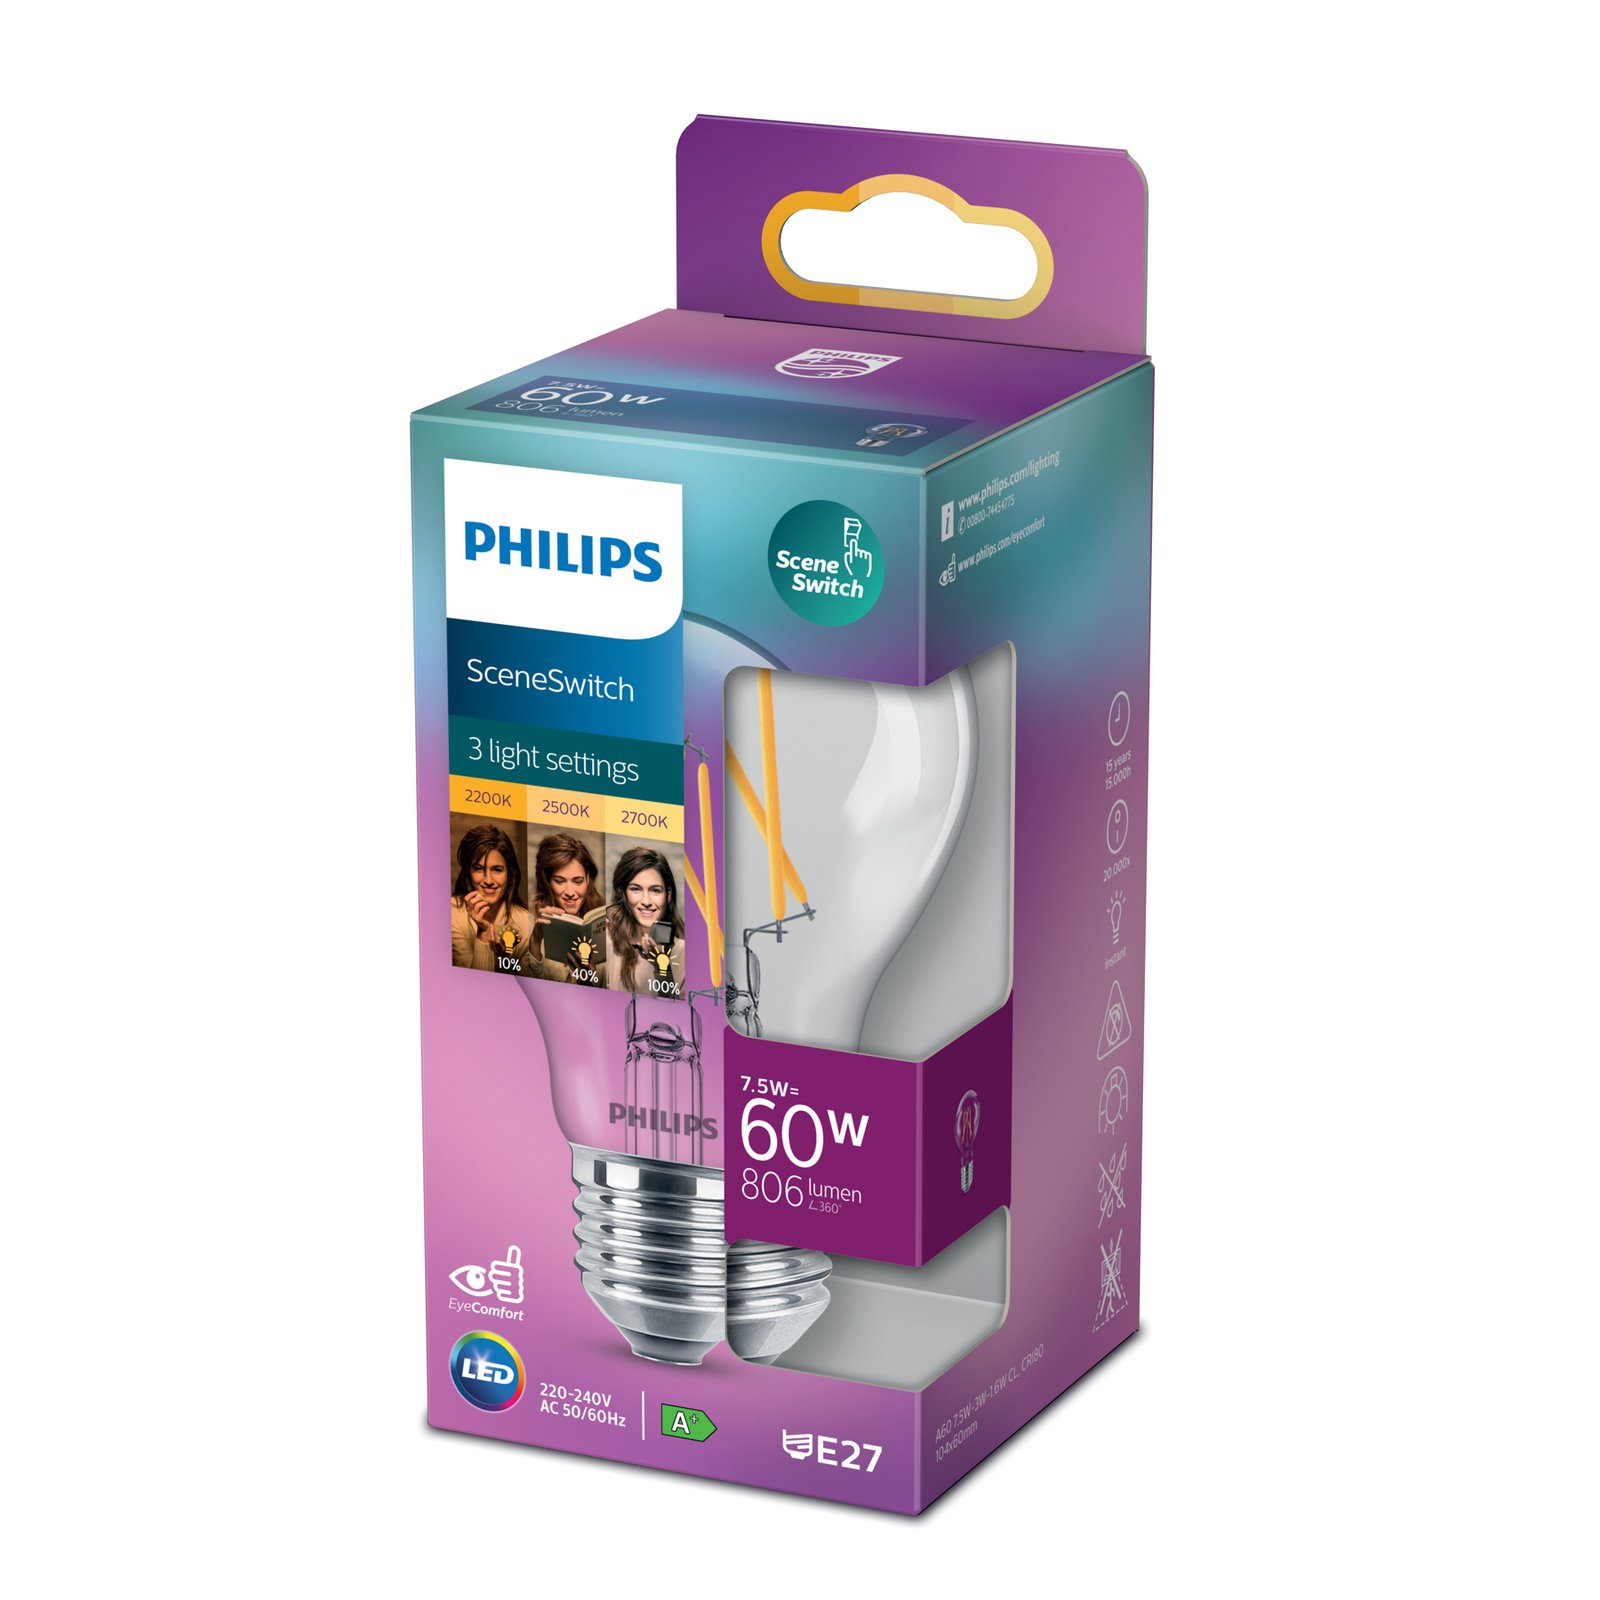 Philips SceneSwitch E27 LED bulb 7.5W filament